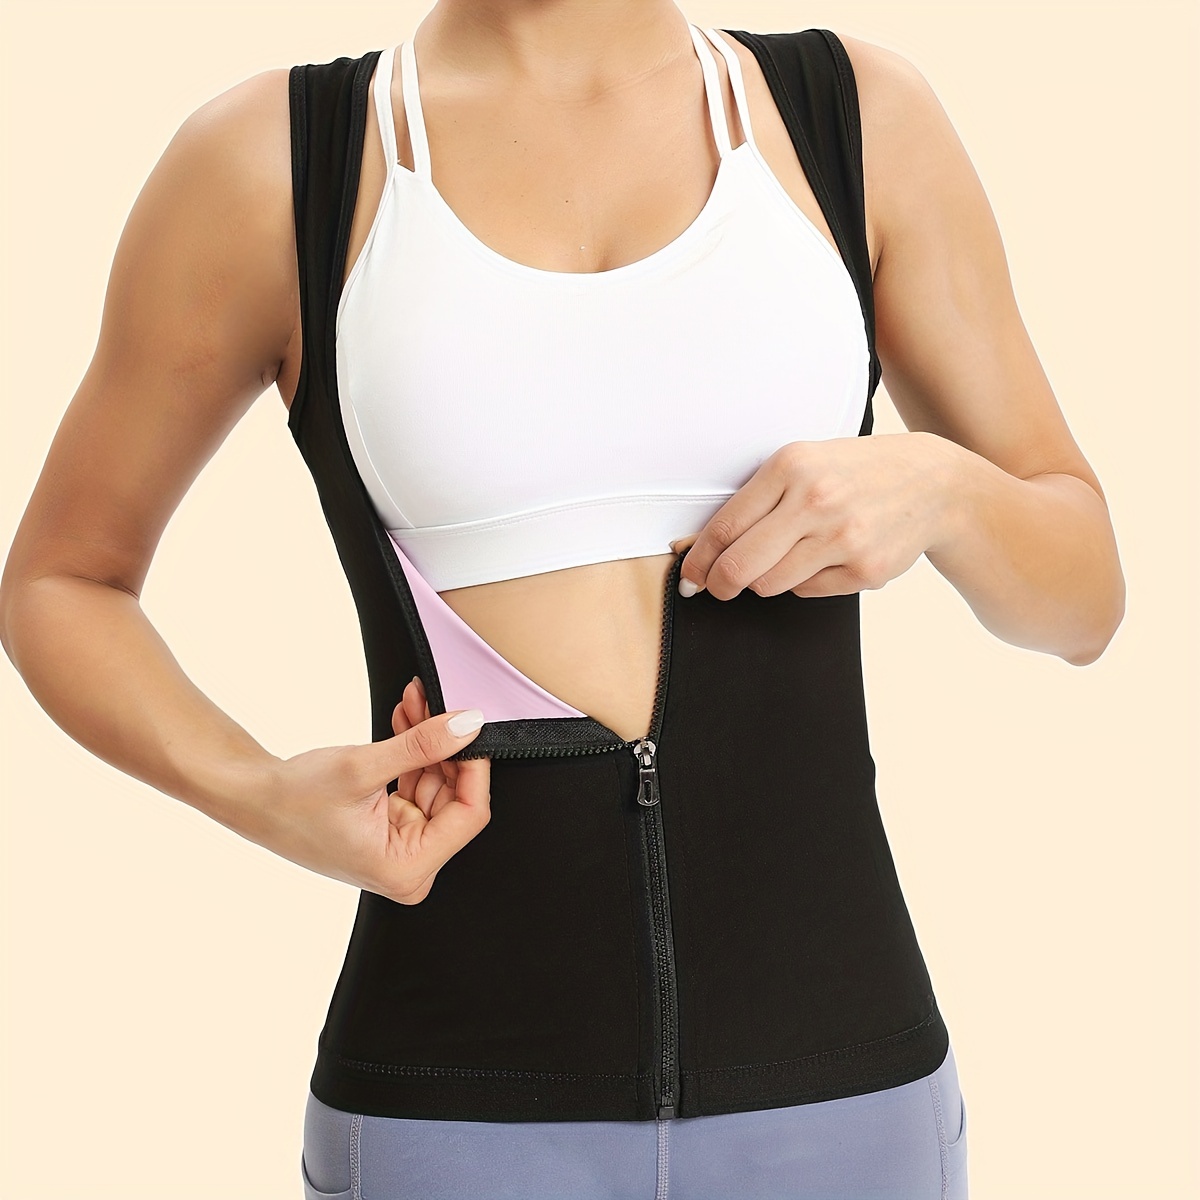 Sauna Suit For Women, Waist Trainer With Zipper, Workout Sweatband, Waist  Trimmer, Tummy Control For Body Shaper